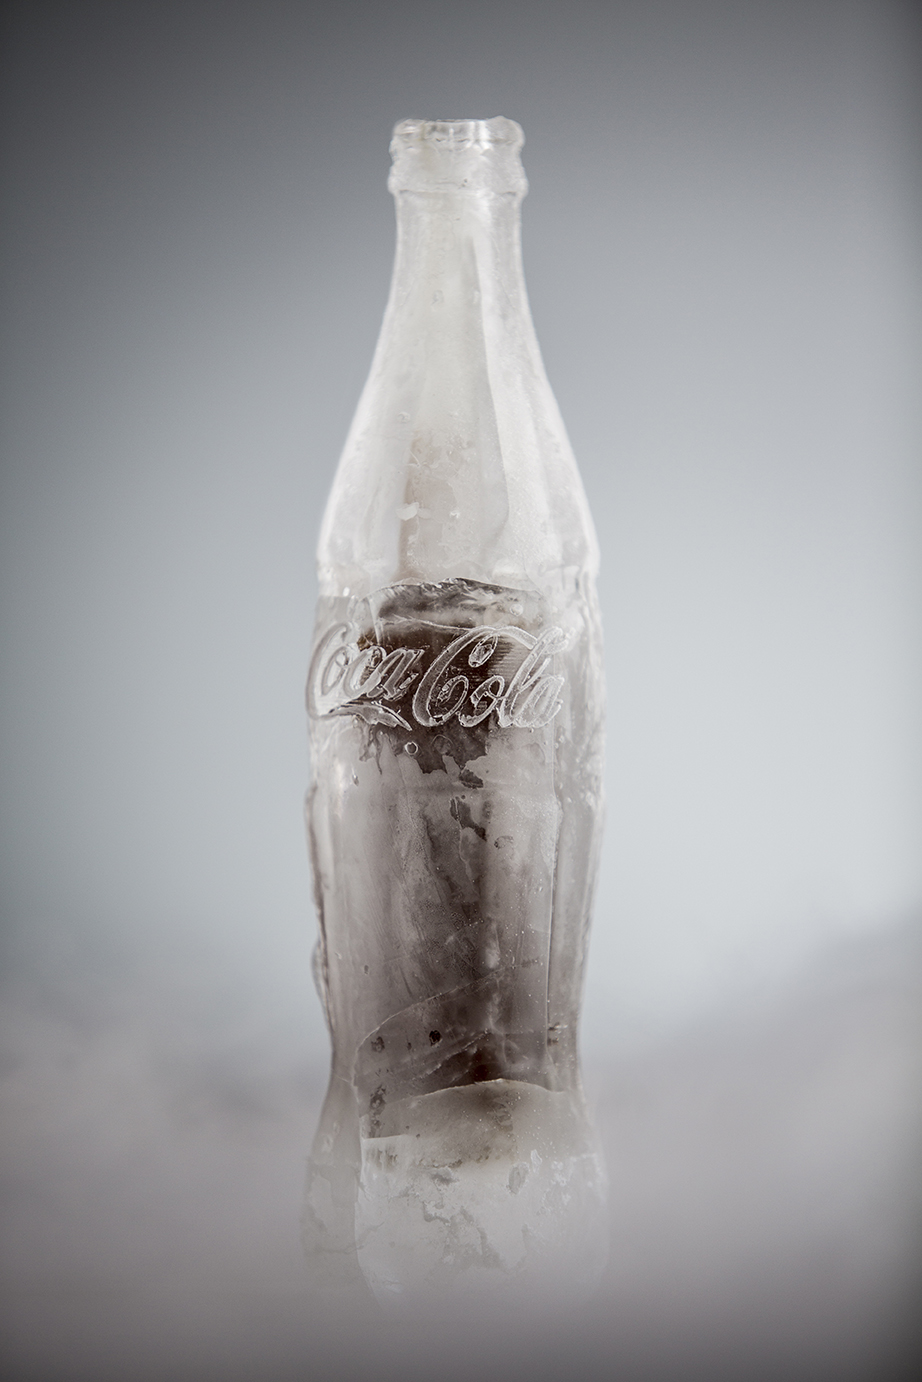 Coca-cola-bottle-cold_MG_7523